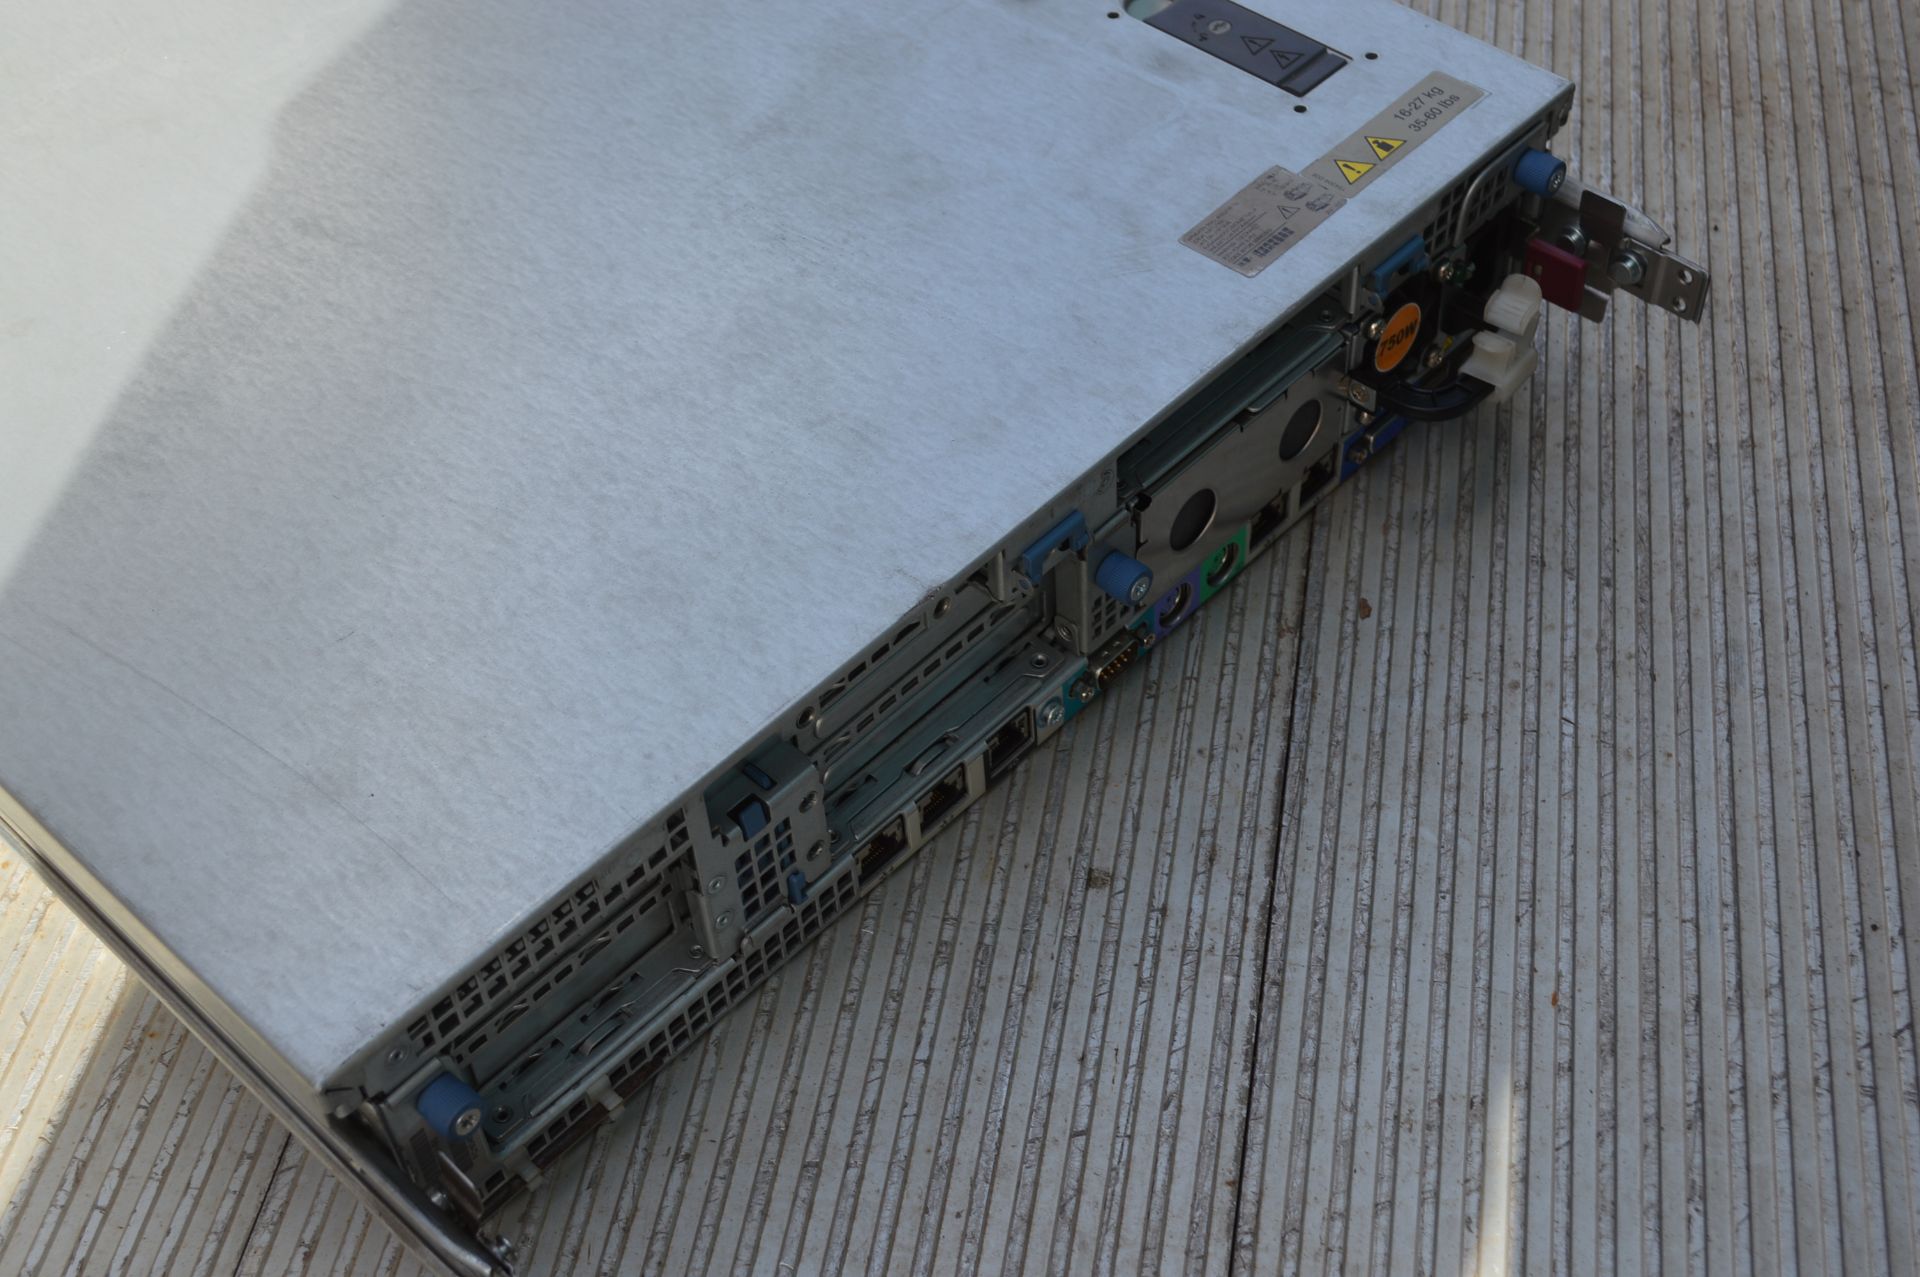 HP Proliant DL385 G7 Rack nMount Server with 2: Dual Port 15K 146GB SAS Drives - Image 6 of 6